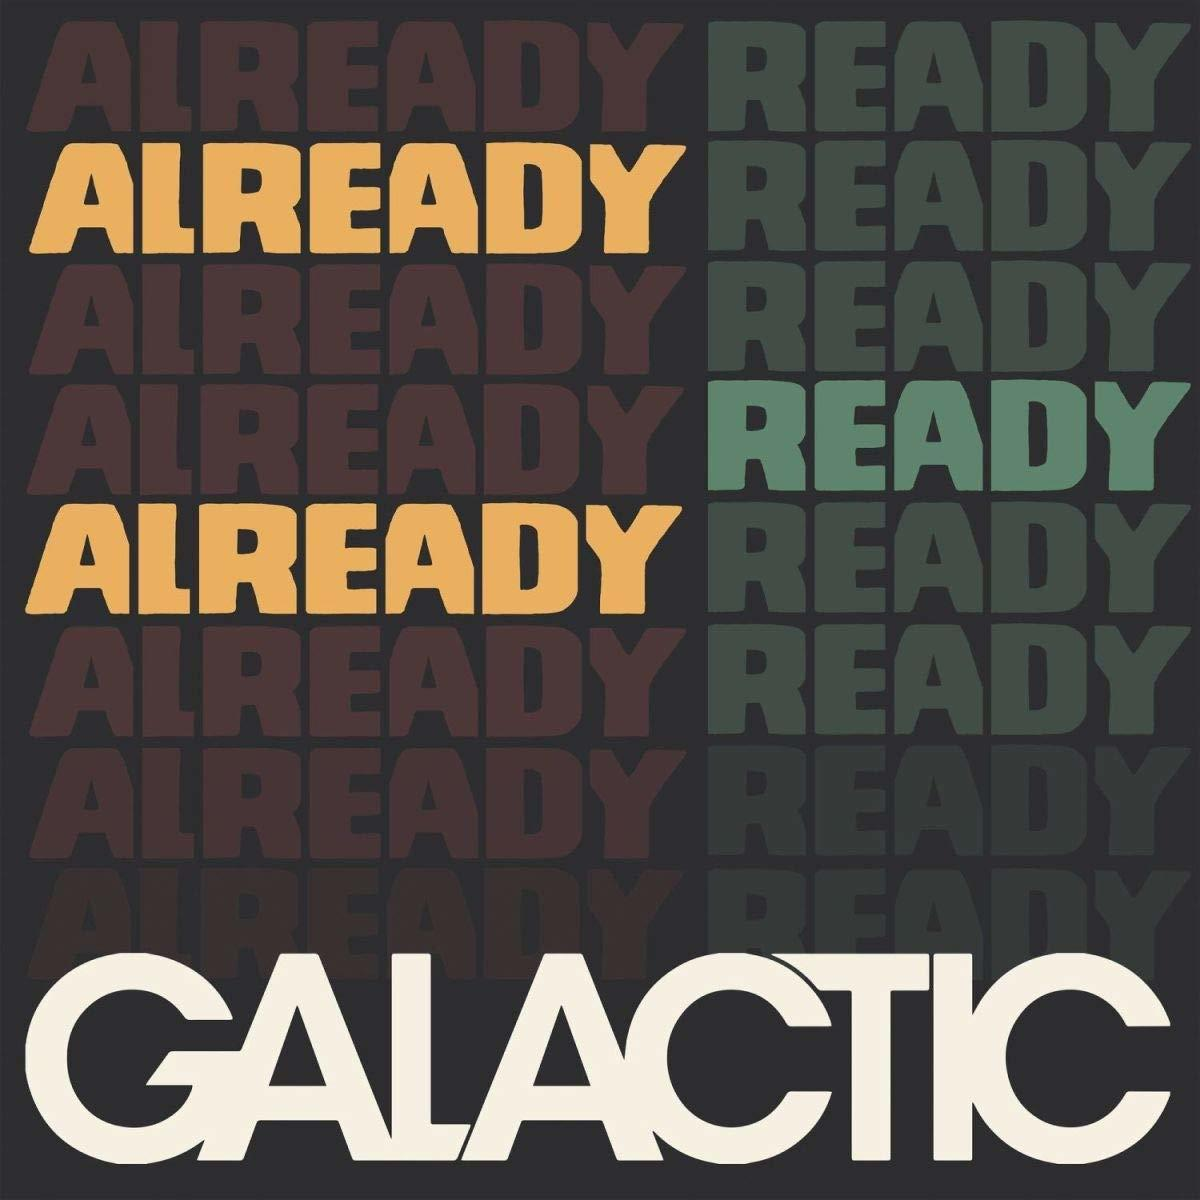 Already - Galactic Already Ready - (Vinyl) (LP)